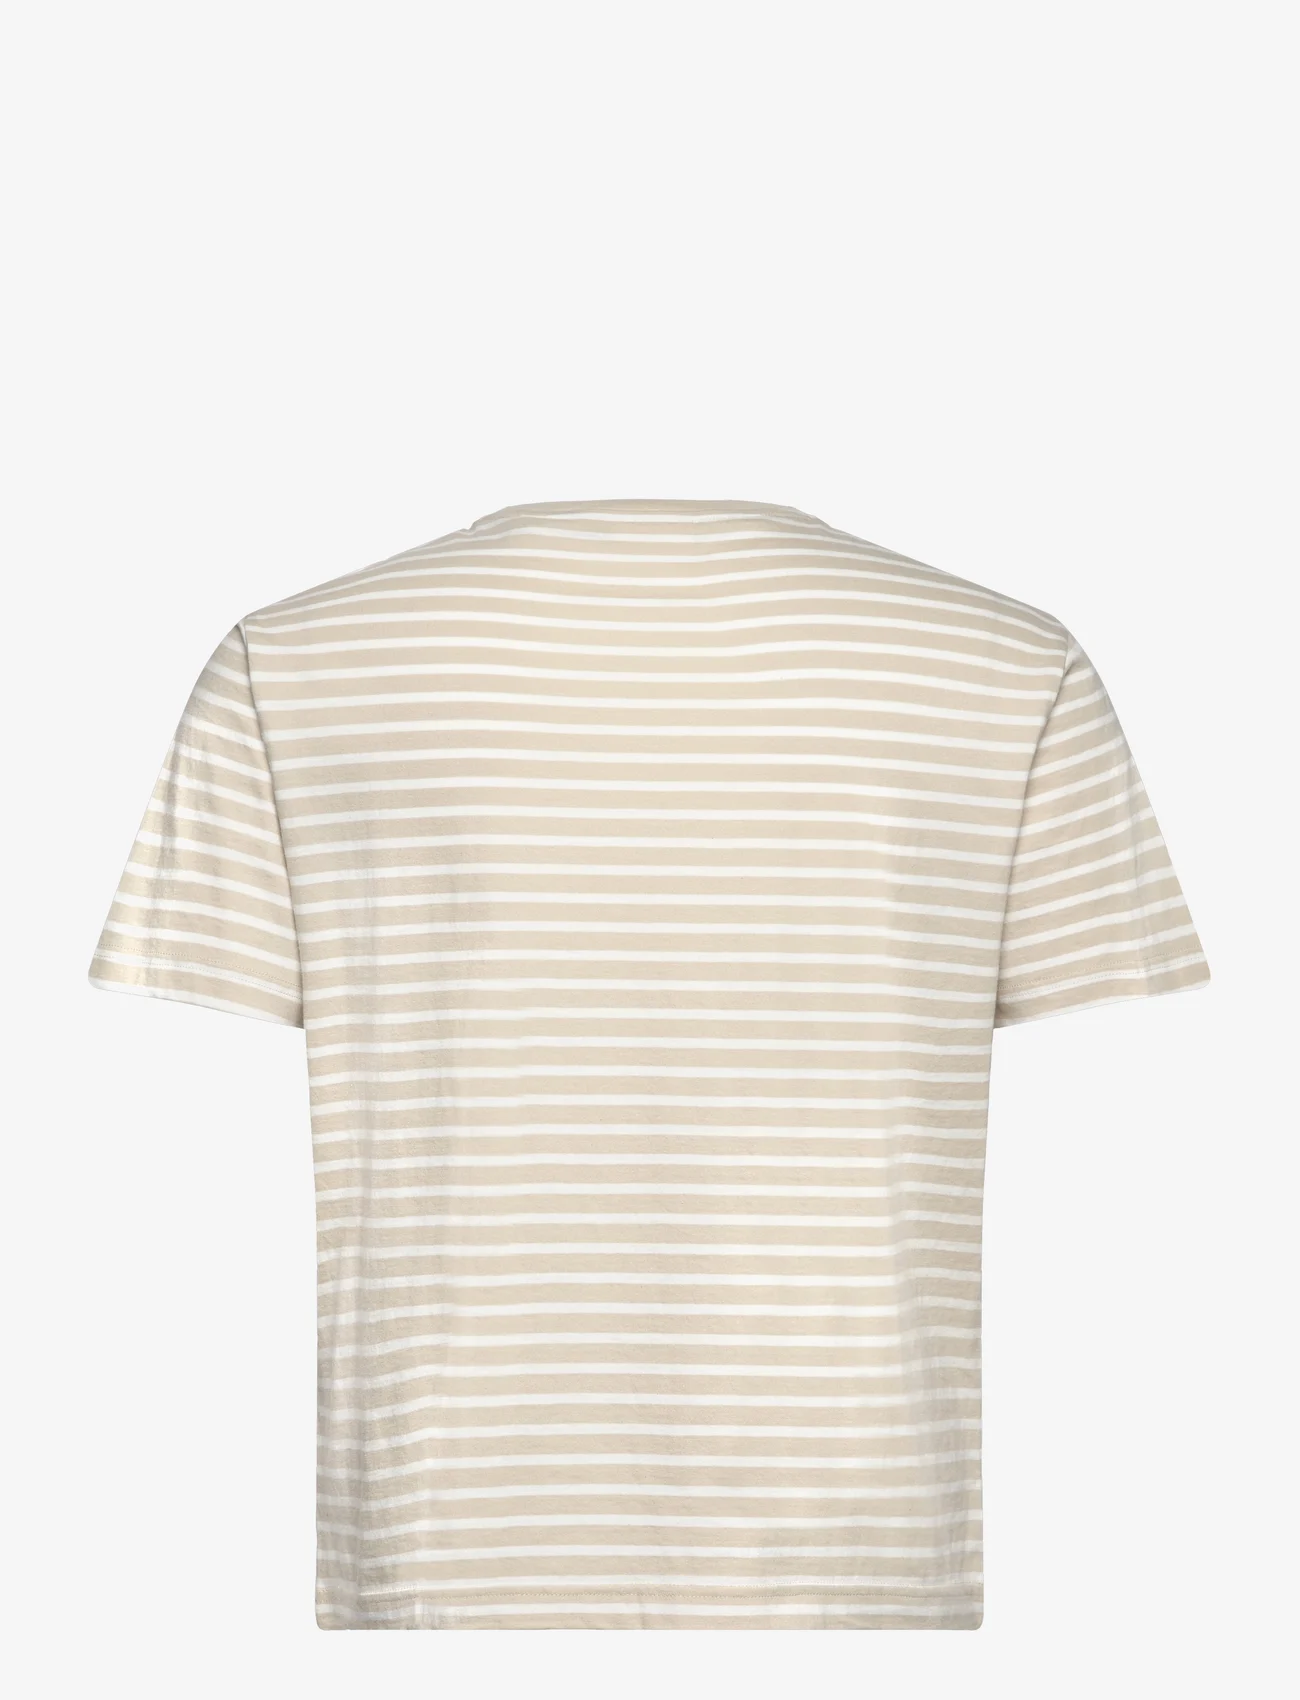 GANT - STRIPED T-SHIRT - kortärmade t-shirts - silky beige - 1